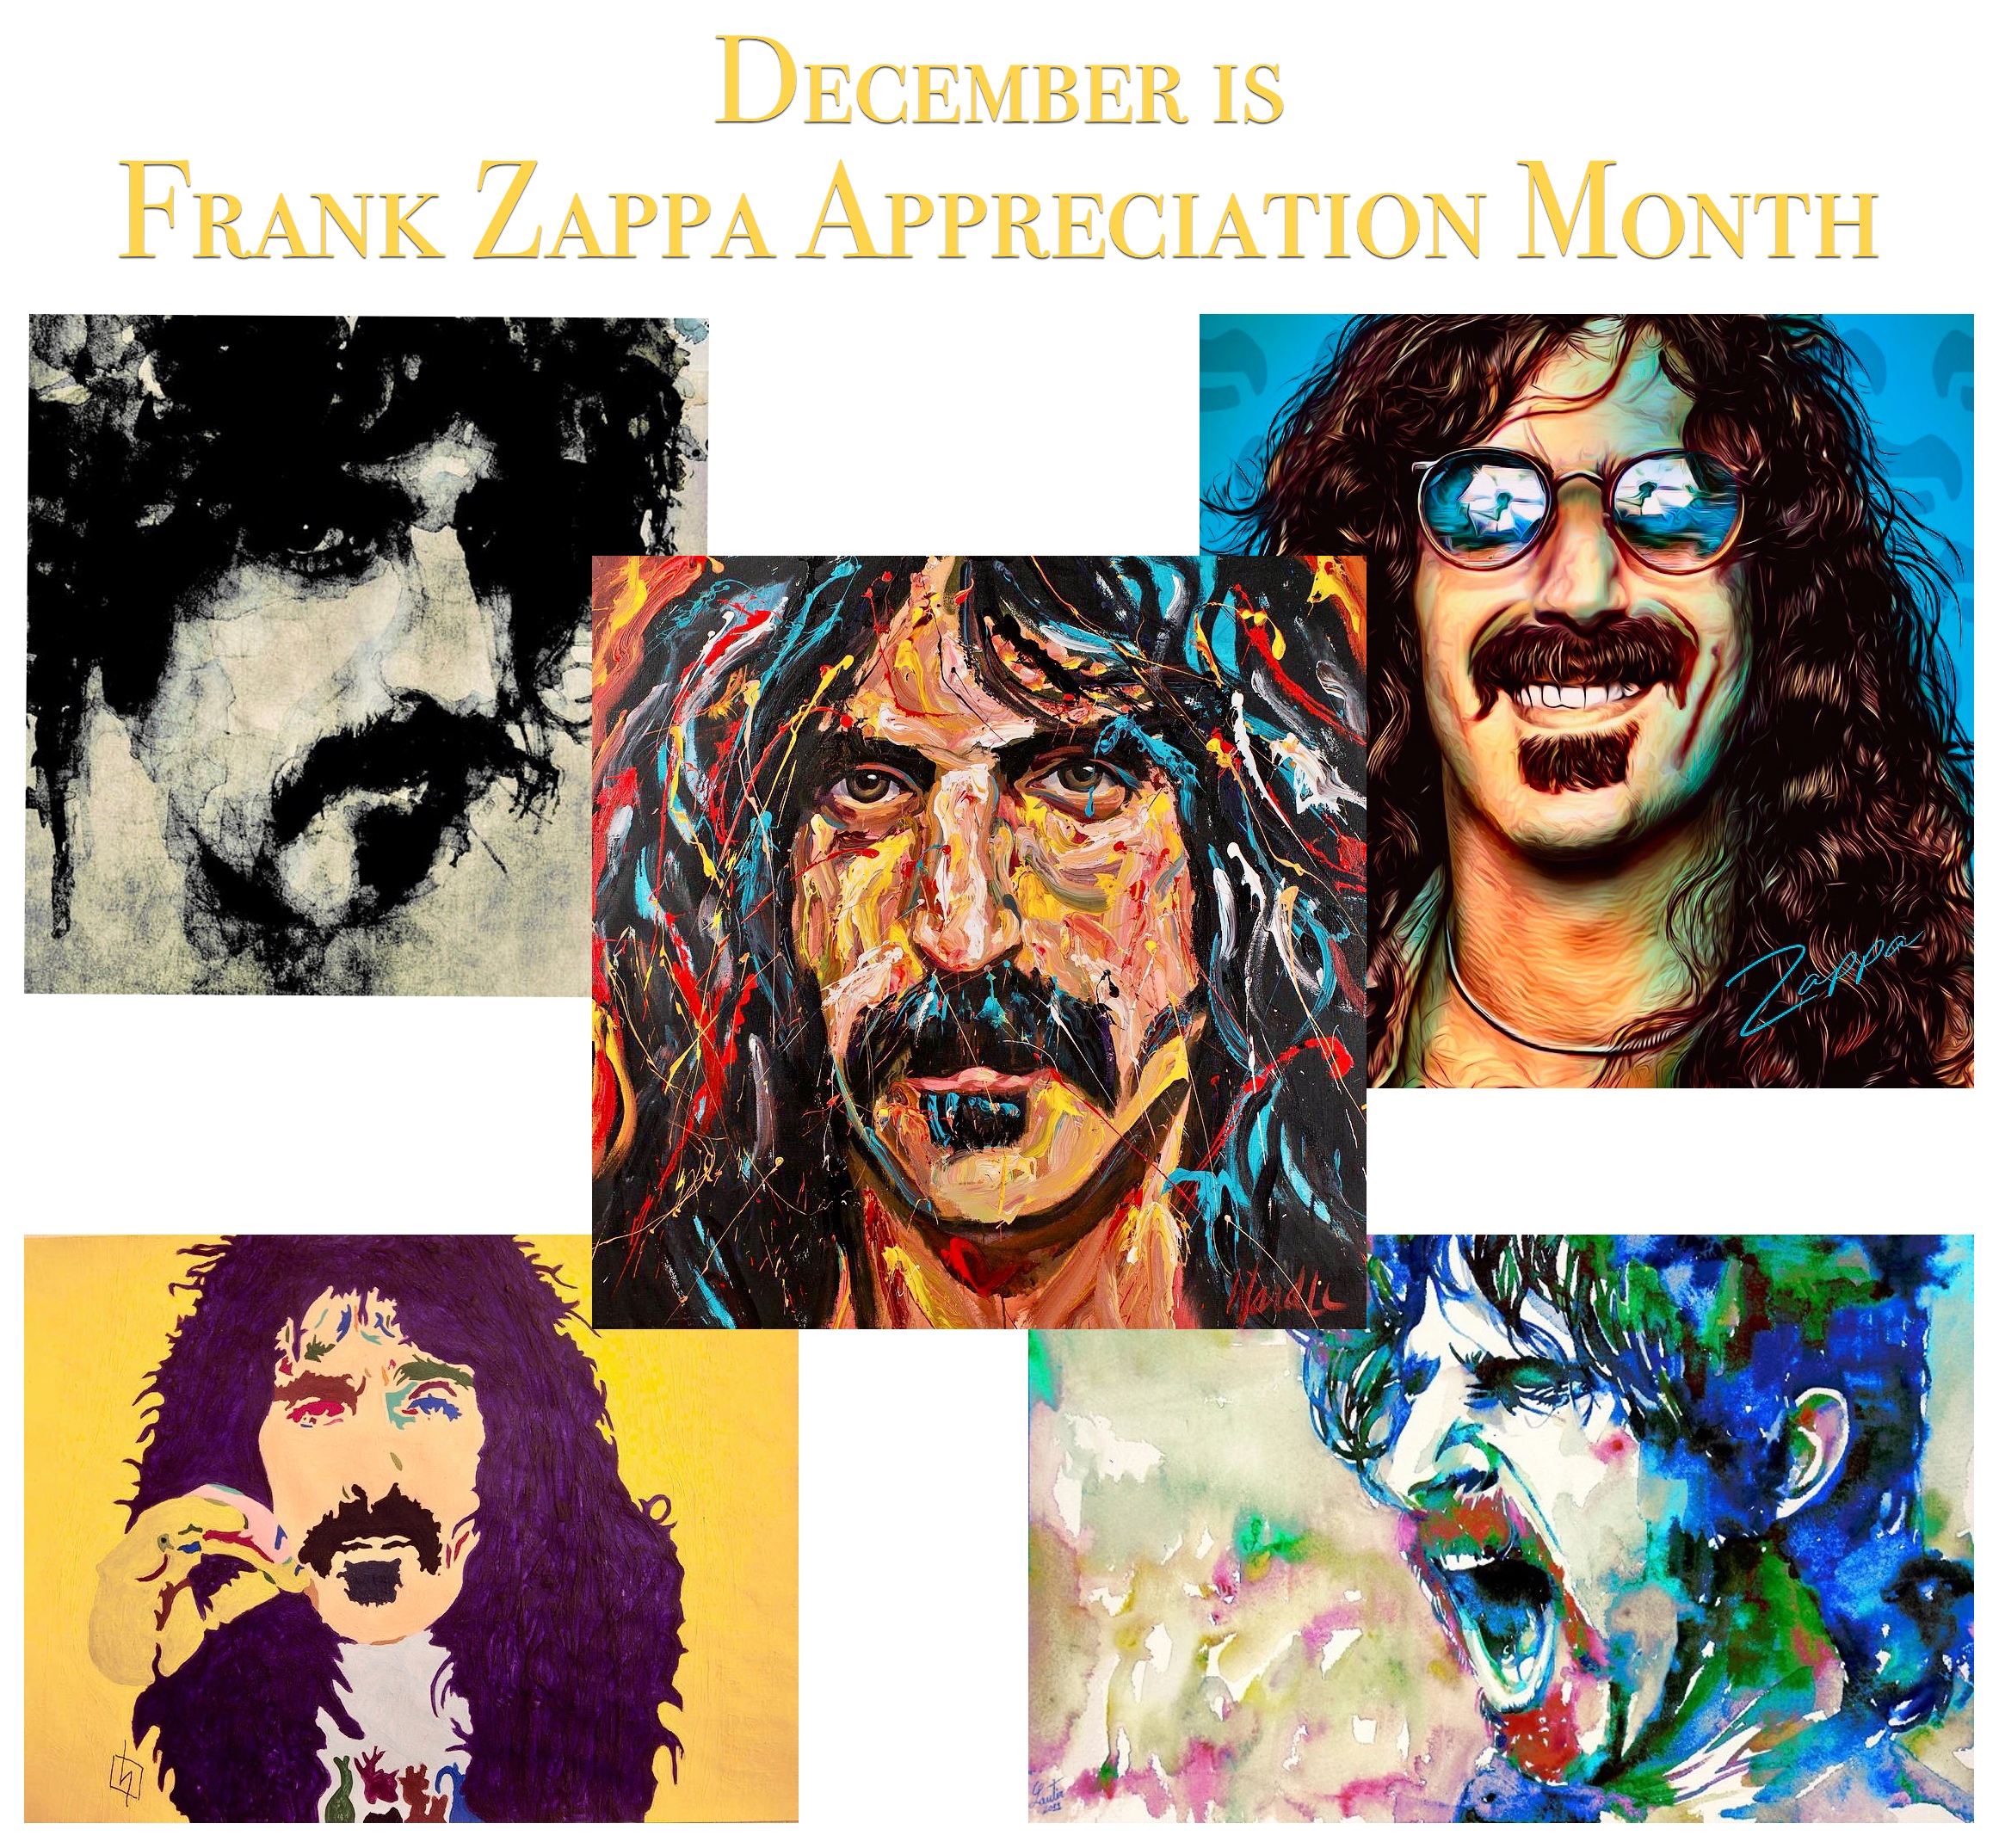 Frank Zappa Appreciation Month